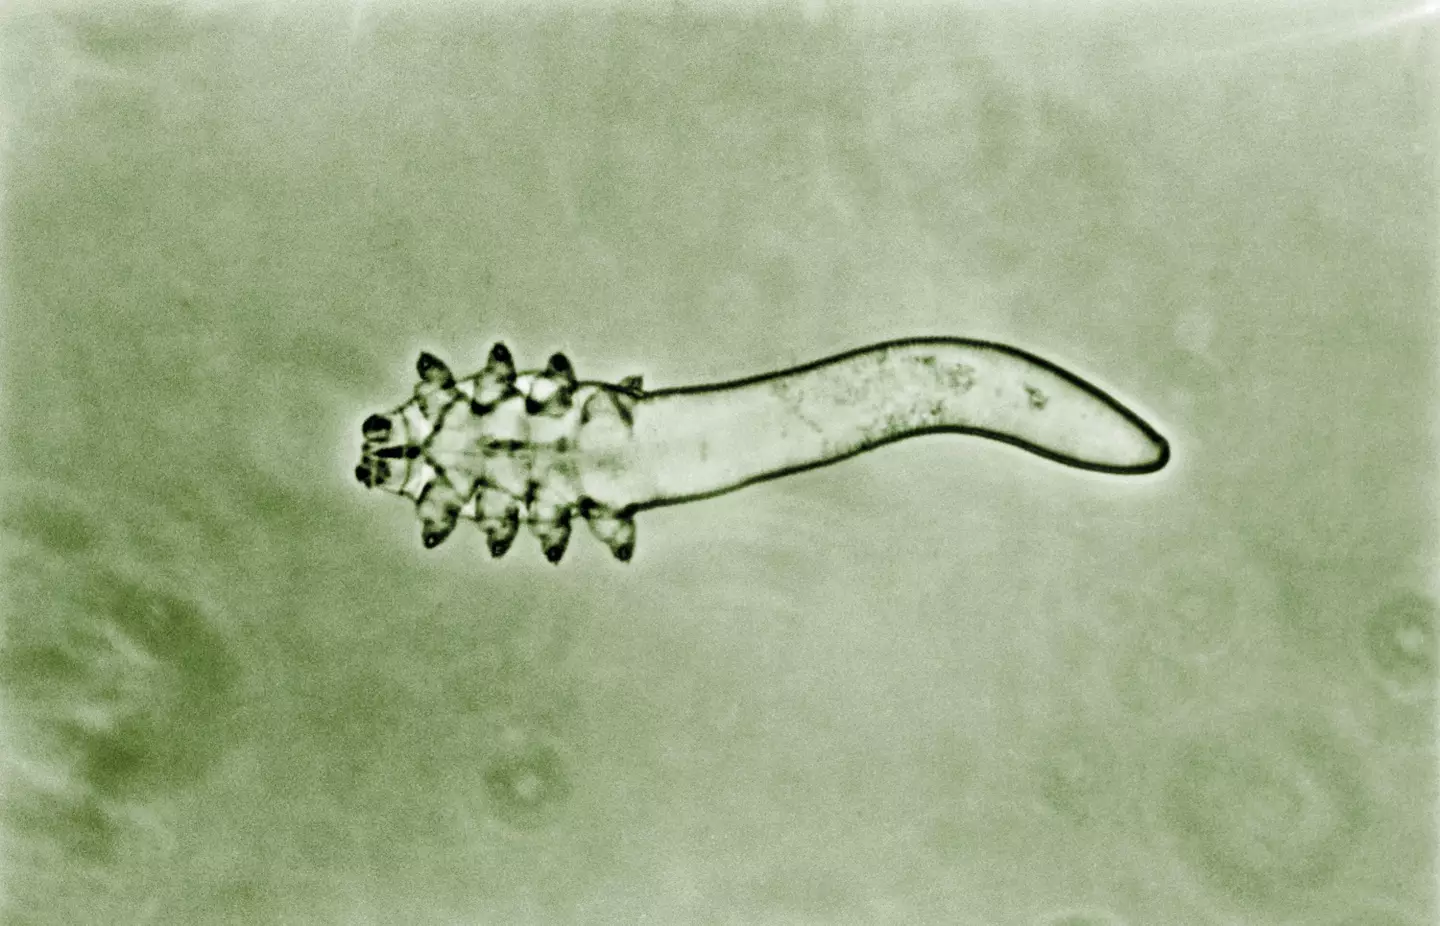 Demodex folliculorum mites live in human pores.